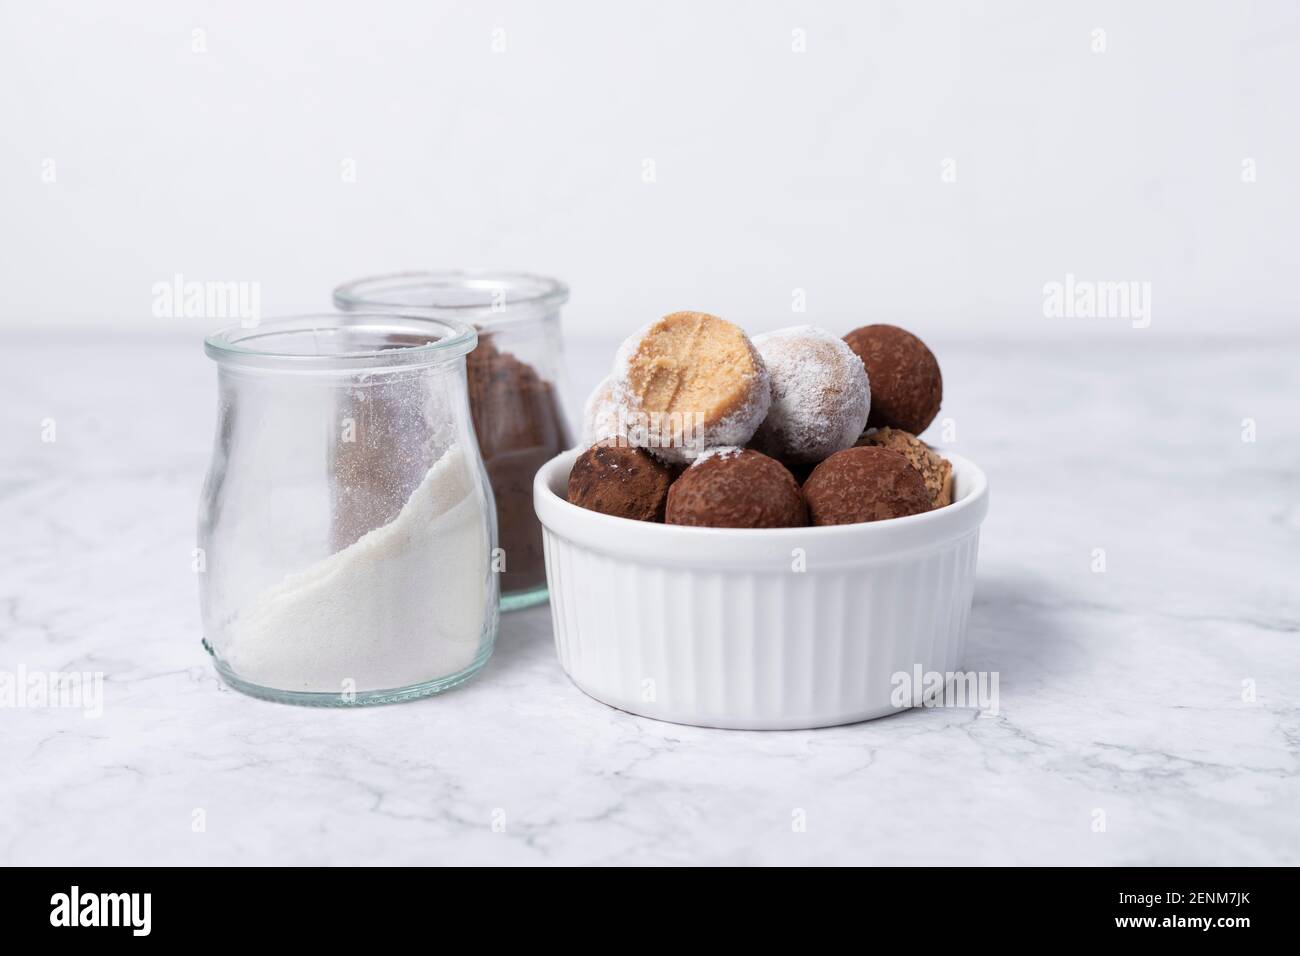 homemade energy balls - truffles made of cocoa and coconut shavings. Stock Photo